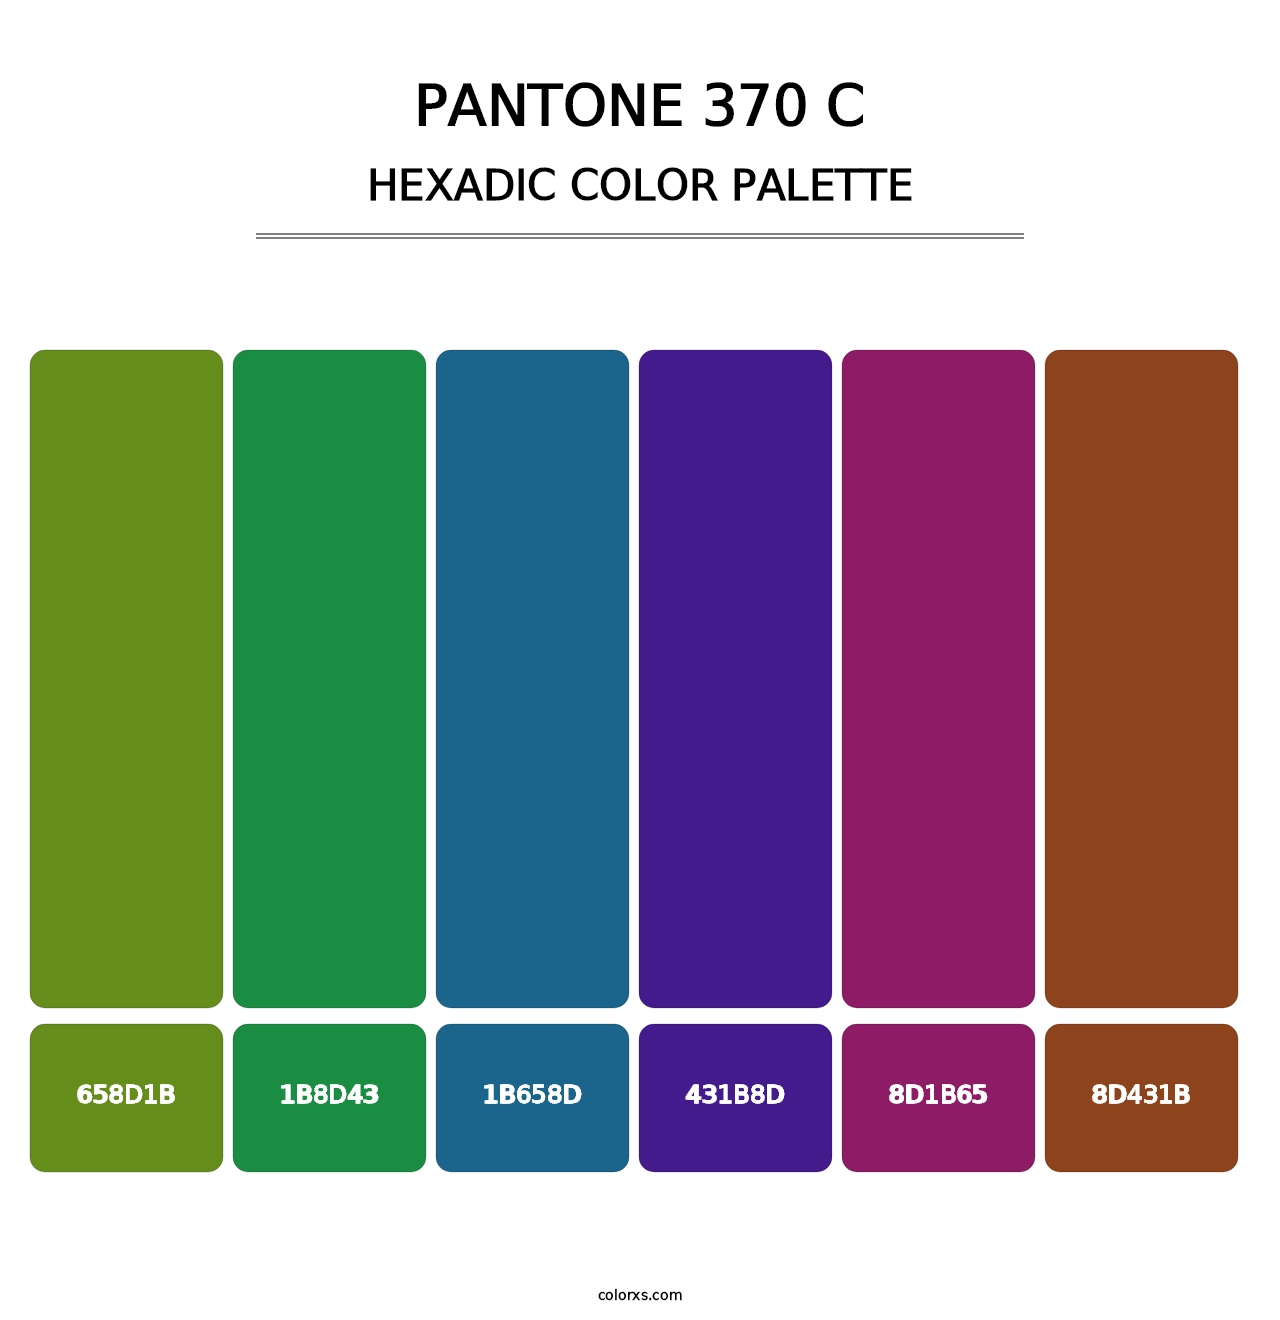 PANTONE 370 C - Hexadic Color Palette